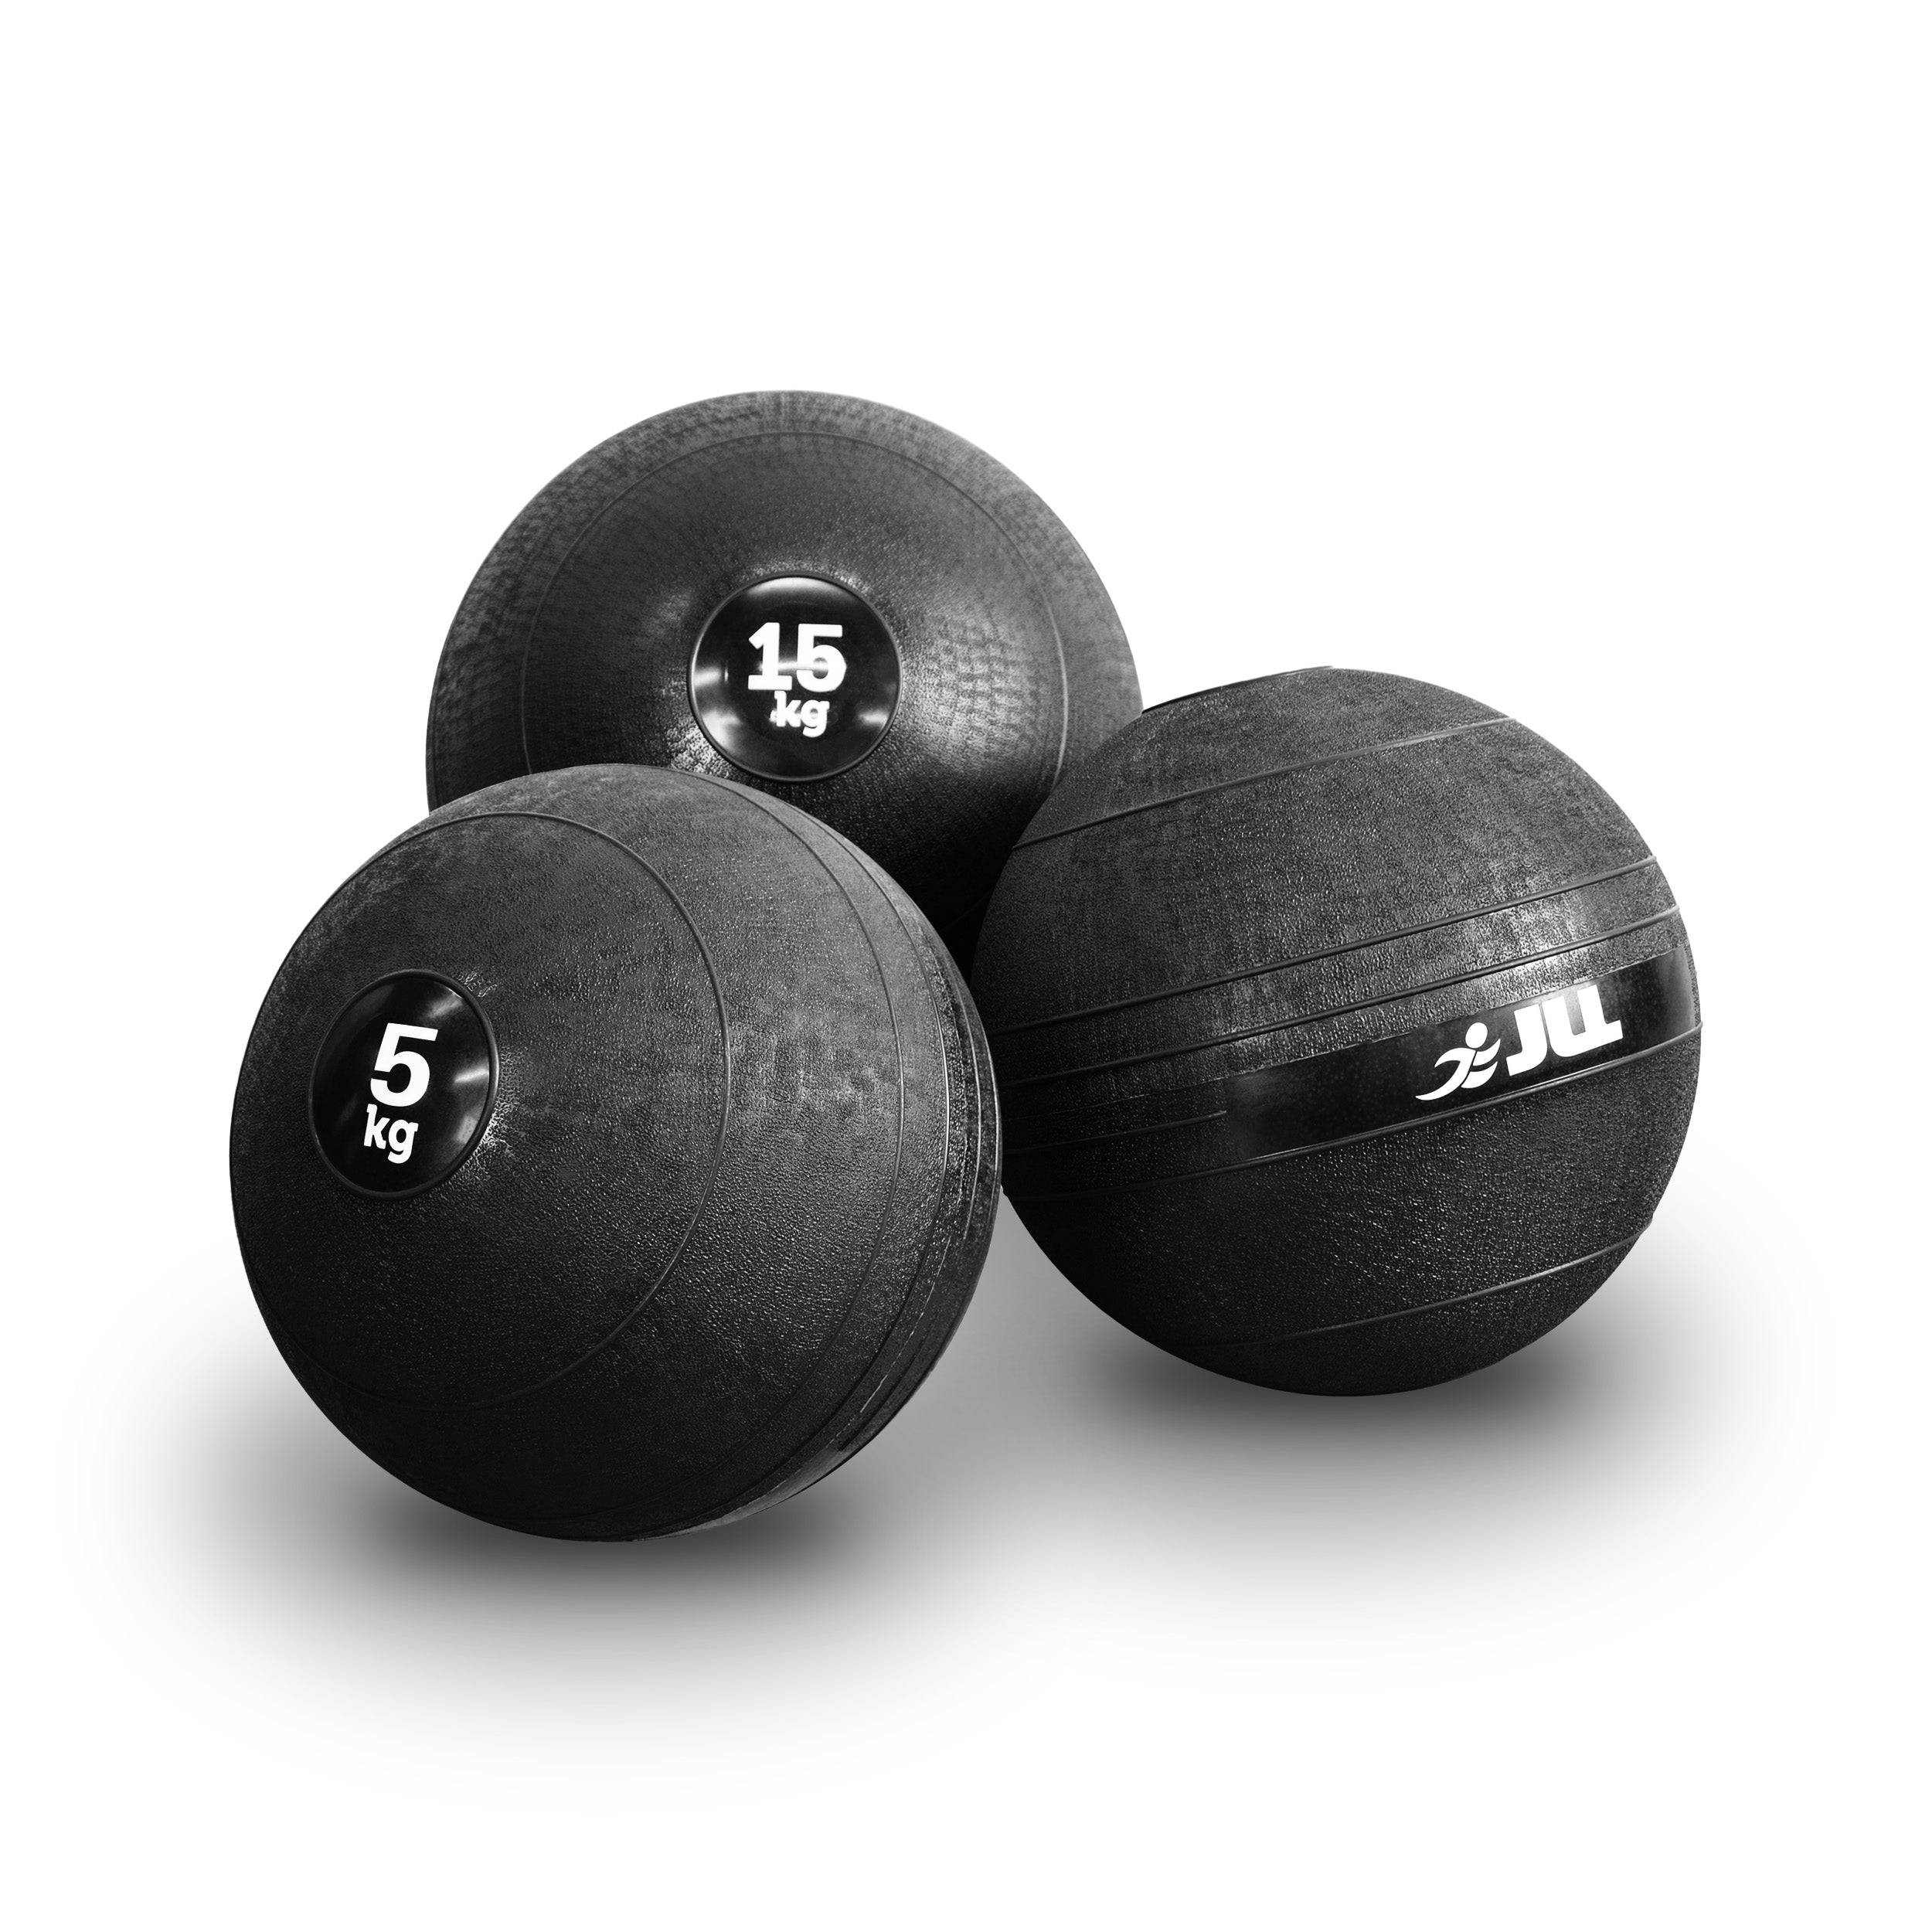 Heavy Duty Slam Ball - Available in 5kg, 10kg, 12kg & 15kg